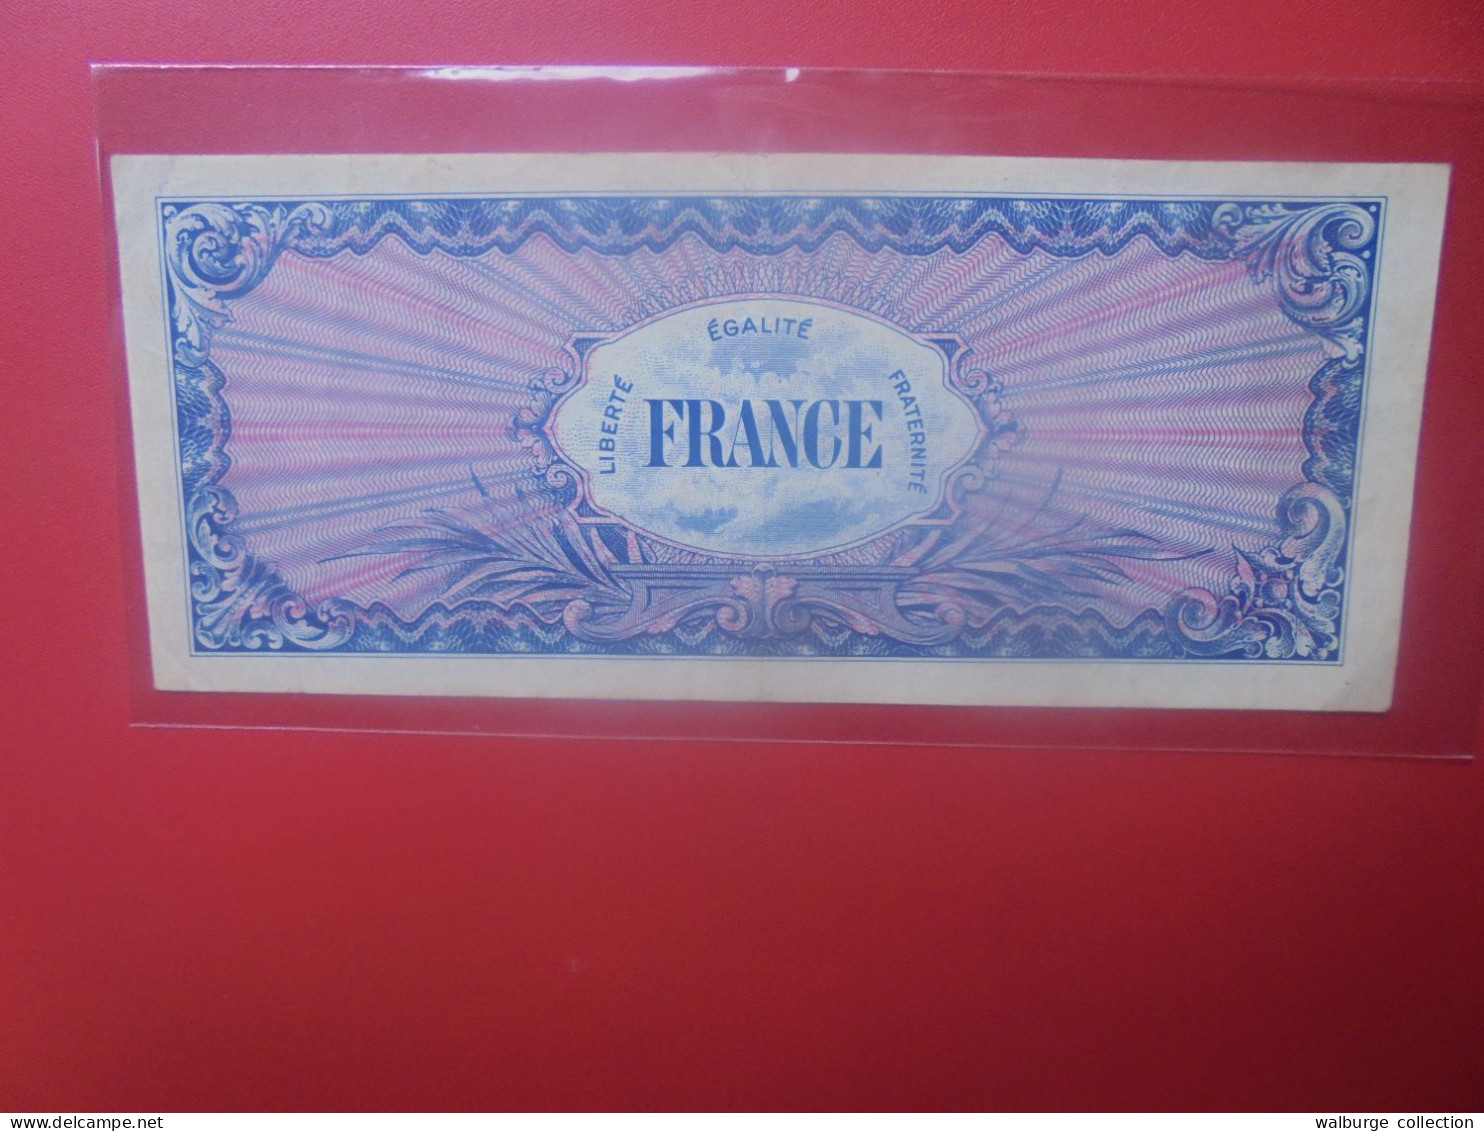 FRANCE 100 FRANCS 1944 Circuler (B.33) - 1944 Flag/France